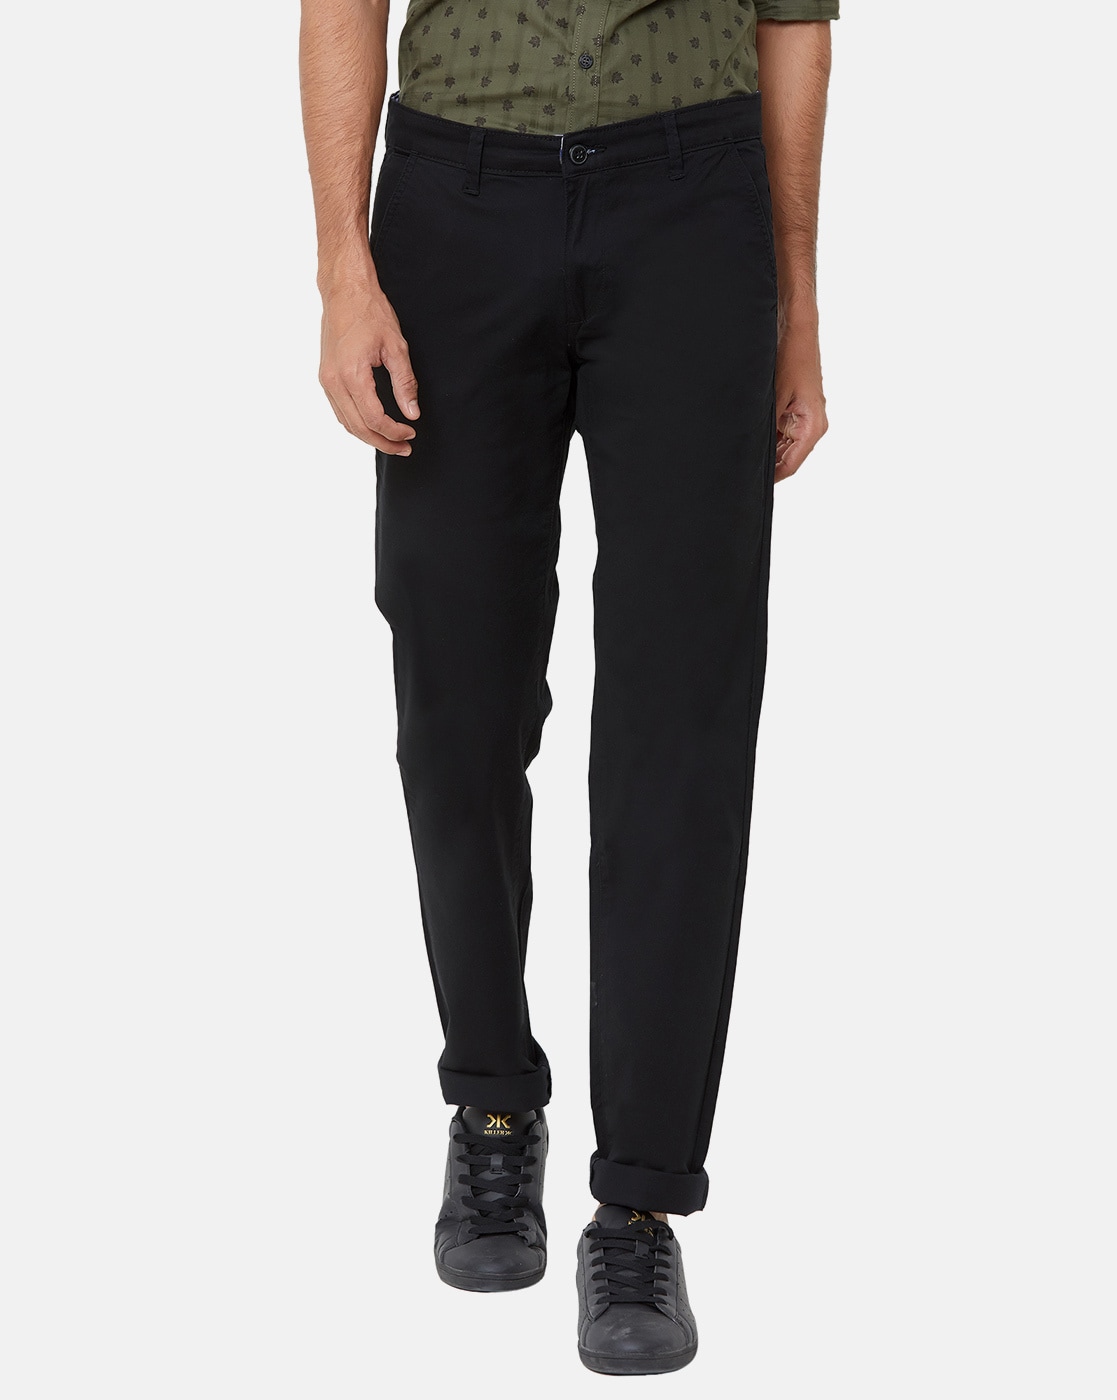 Buy Duke Black Cotton Slim Fit Trousers for Mens Online  Tata CLiQ